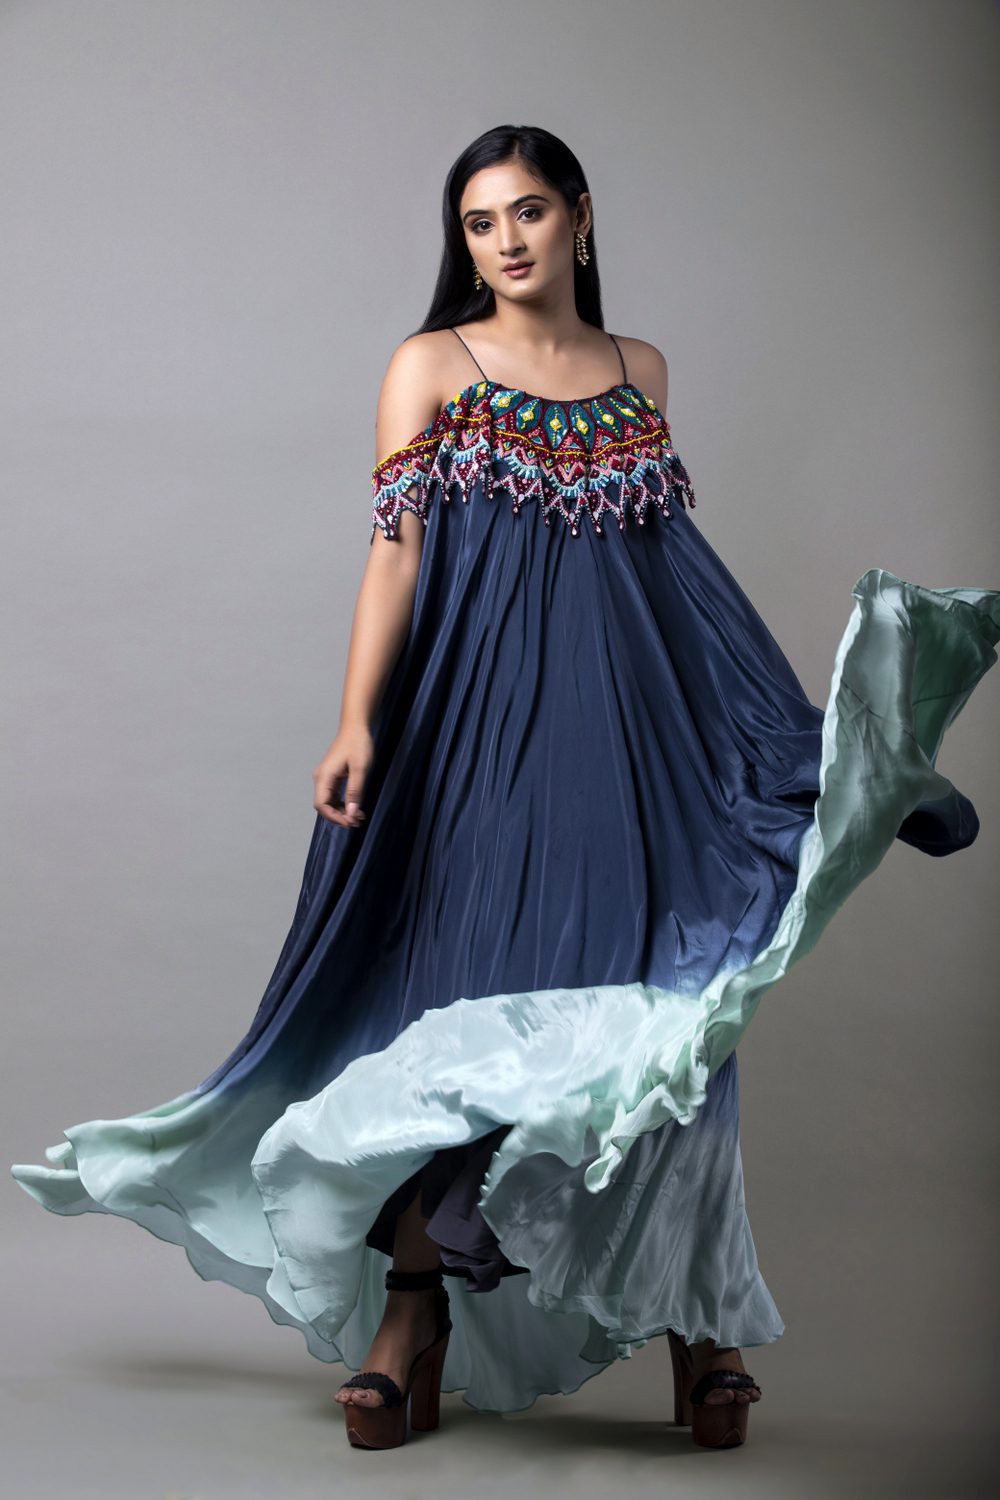 Buy Occasion Wear online in Toronto - Dubai - Delhi - London | Best Stylish Party Wear Outfits Ideas for Girls | Floral Maxi Dresses for Women in Delhi - Toronto - Dubai - Mumbai